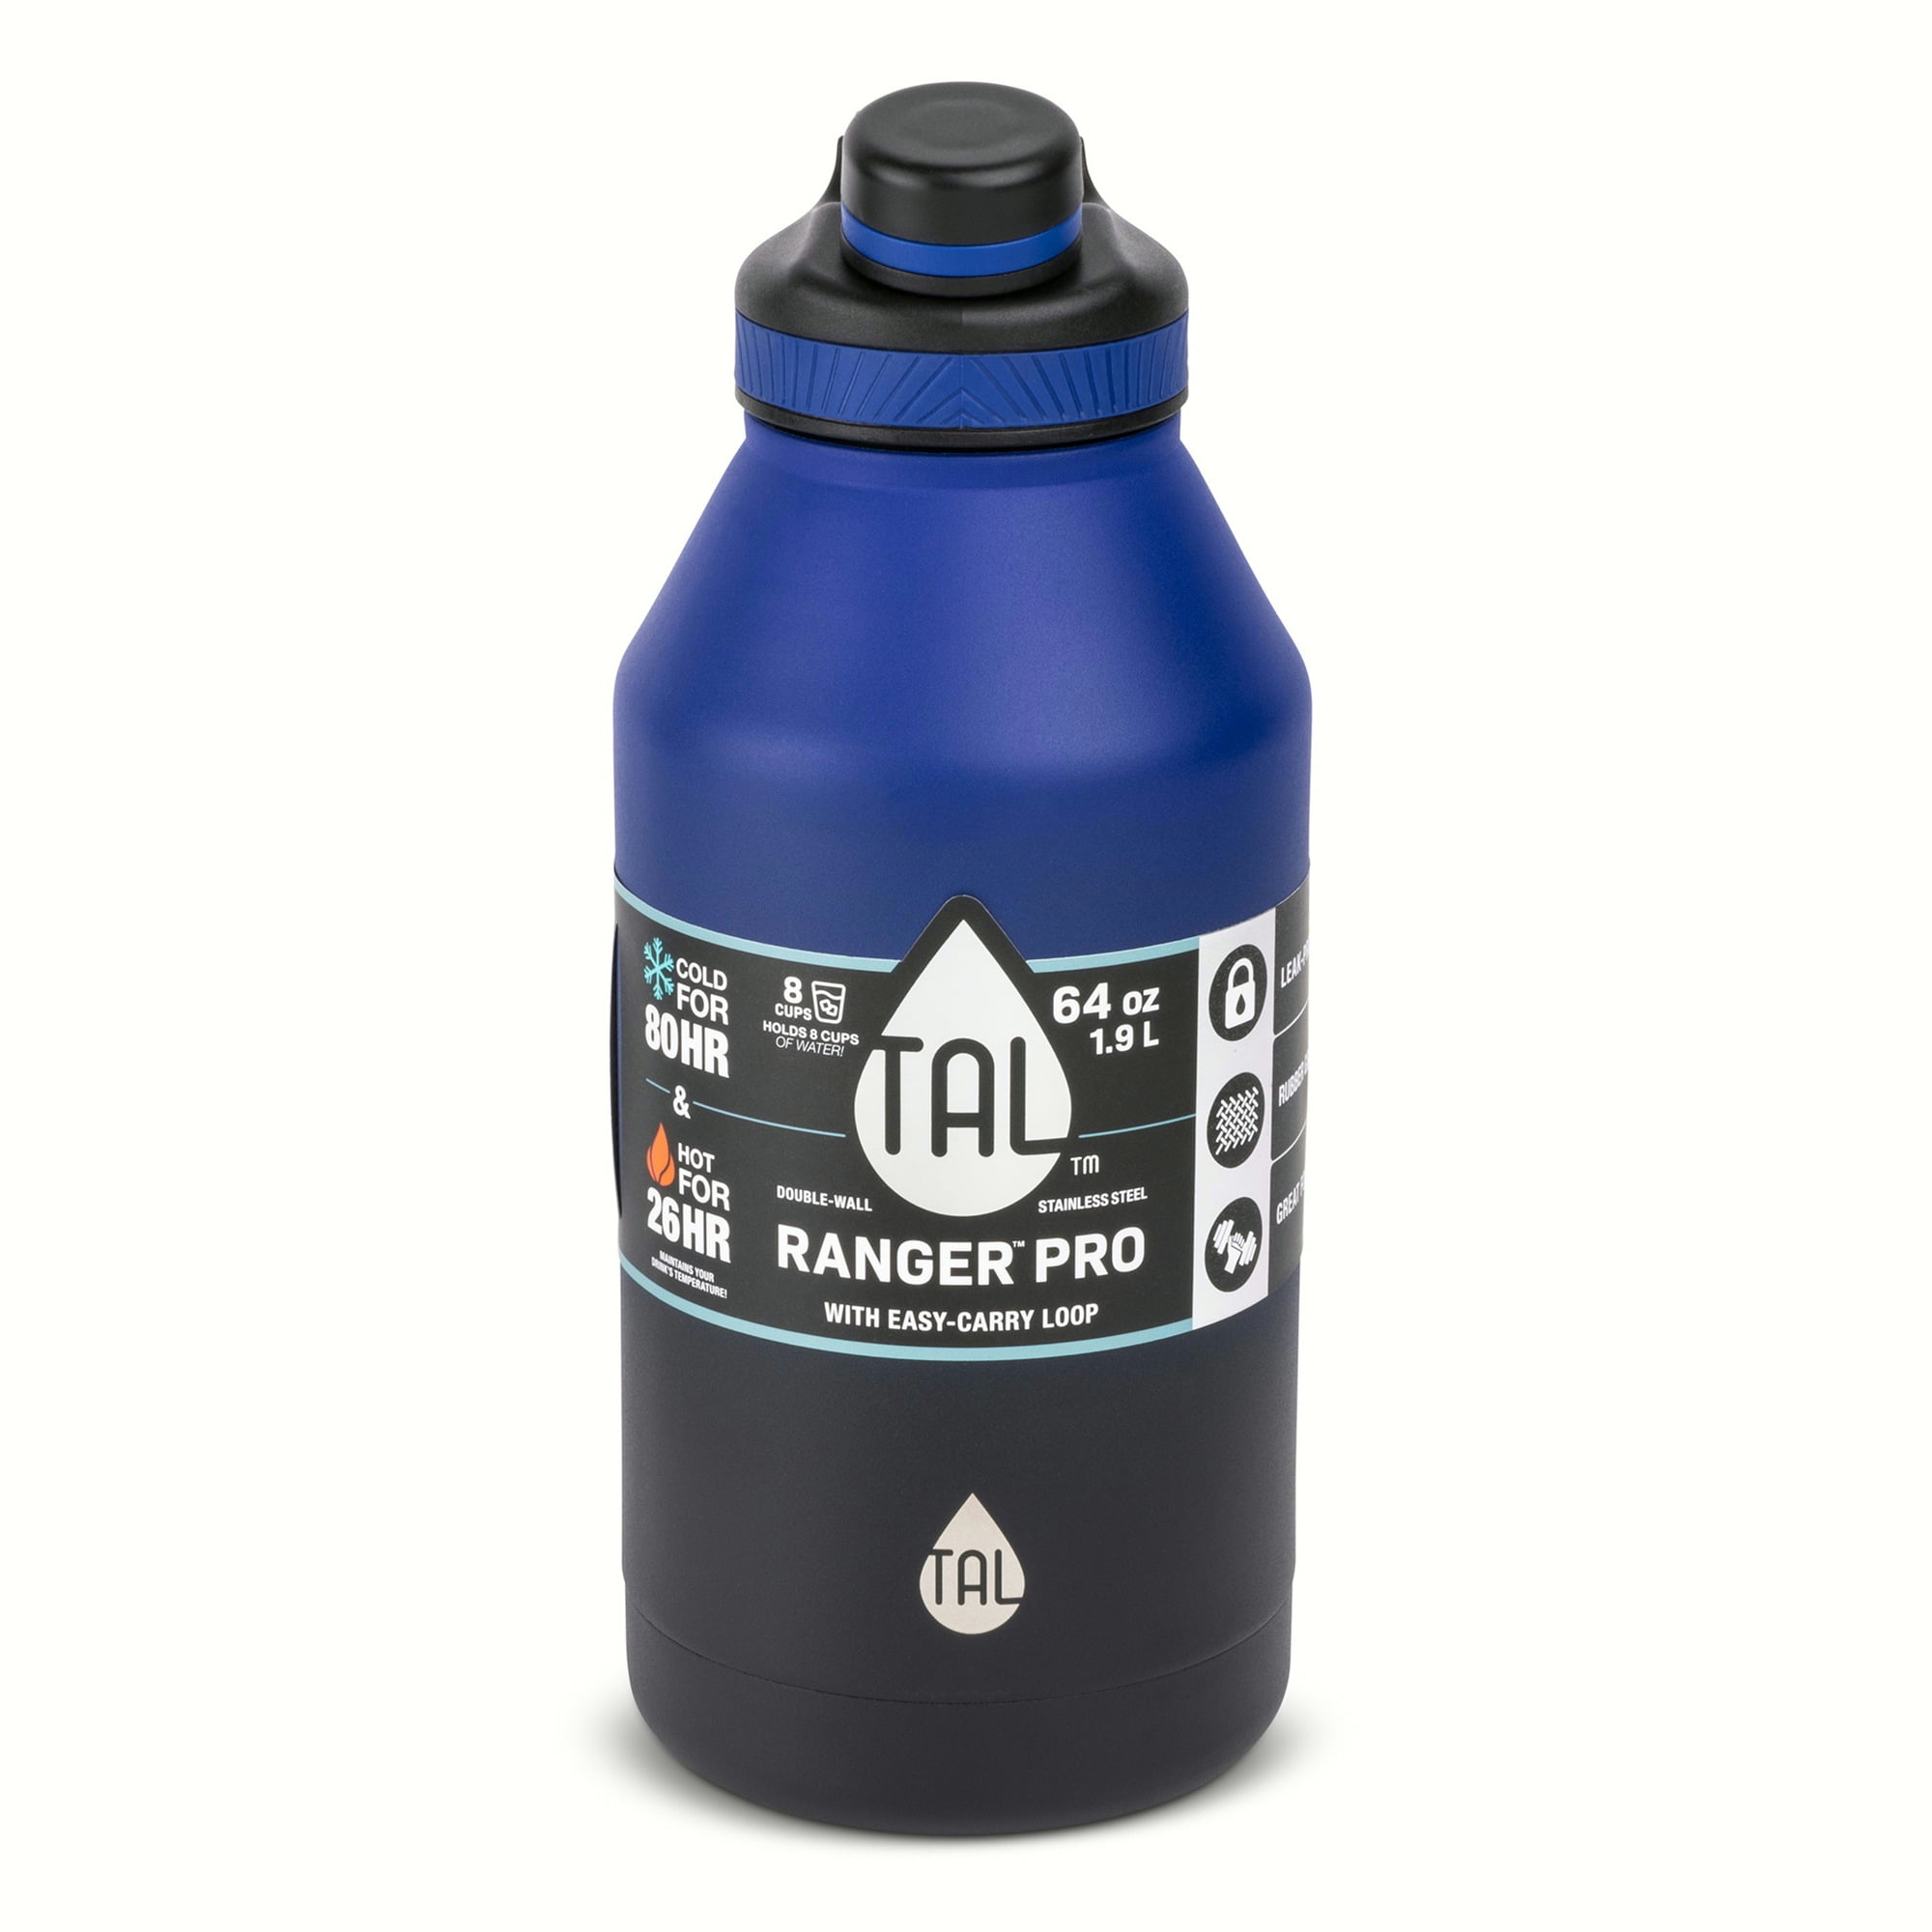 TAL Stainless Steel Ranger Water Bottle 64 fl oz, Black 